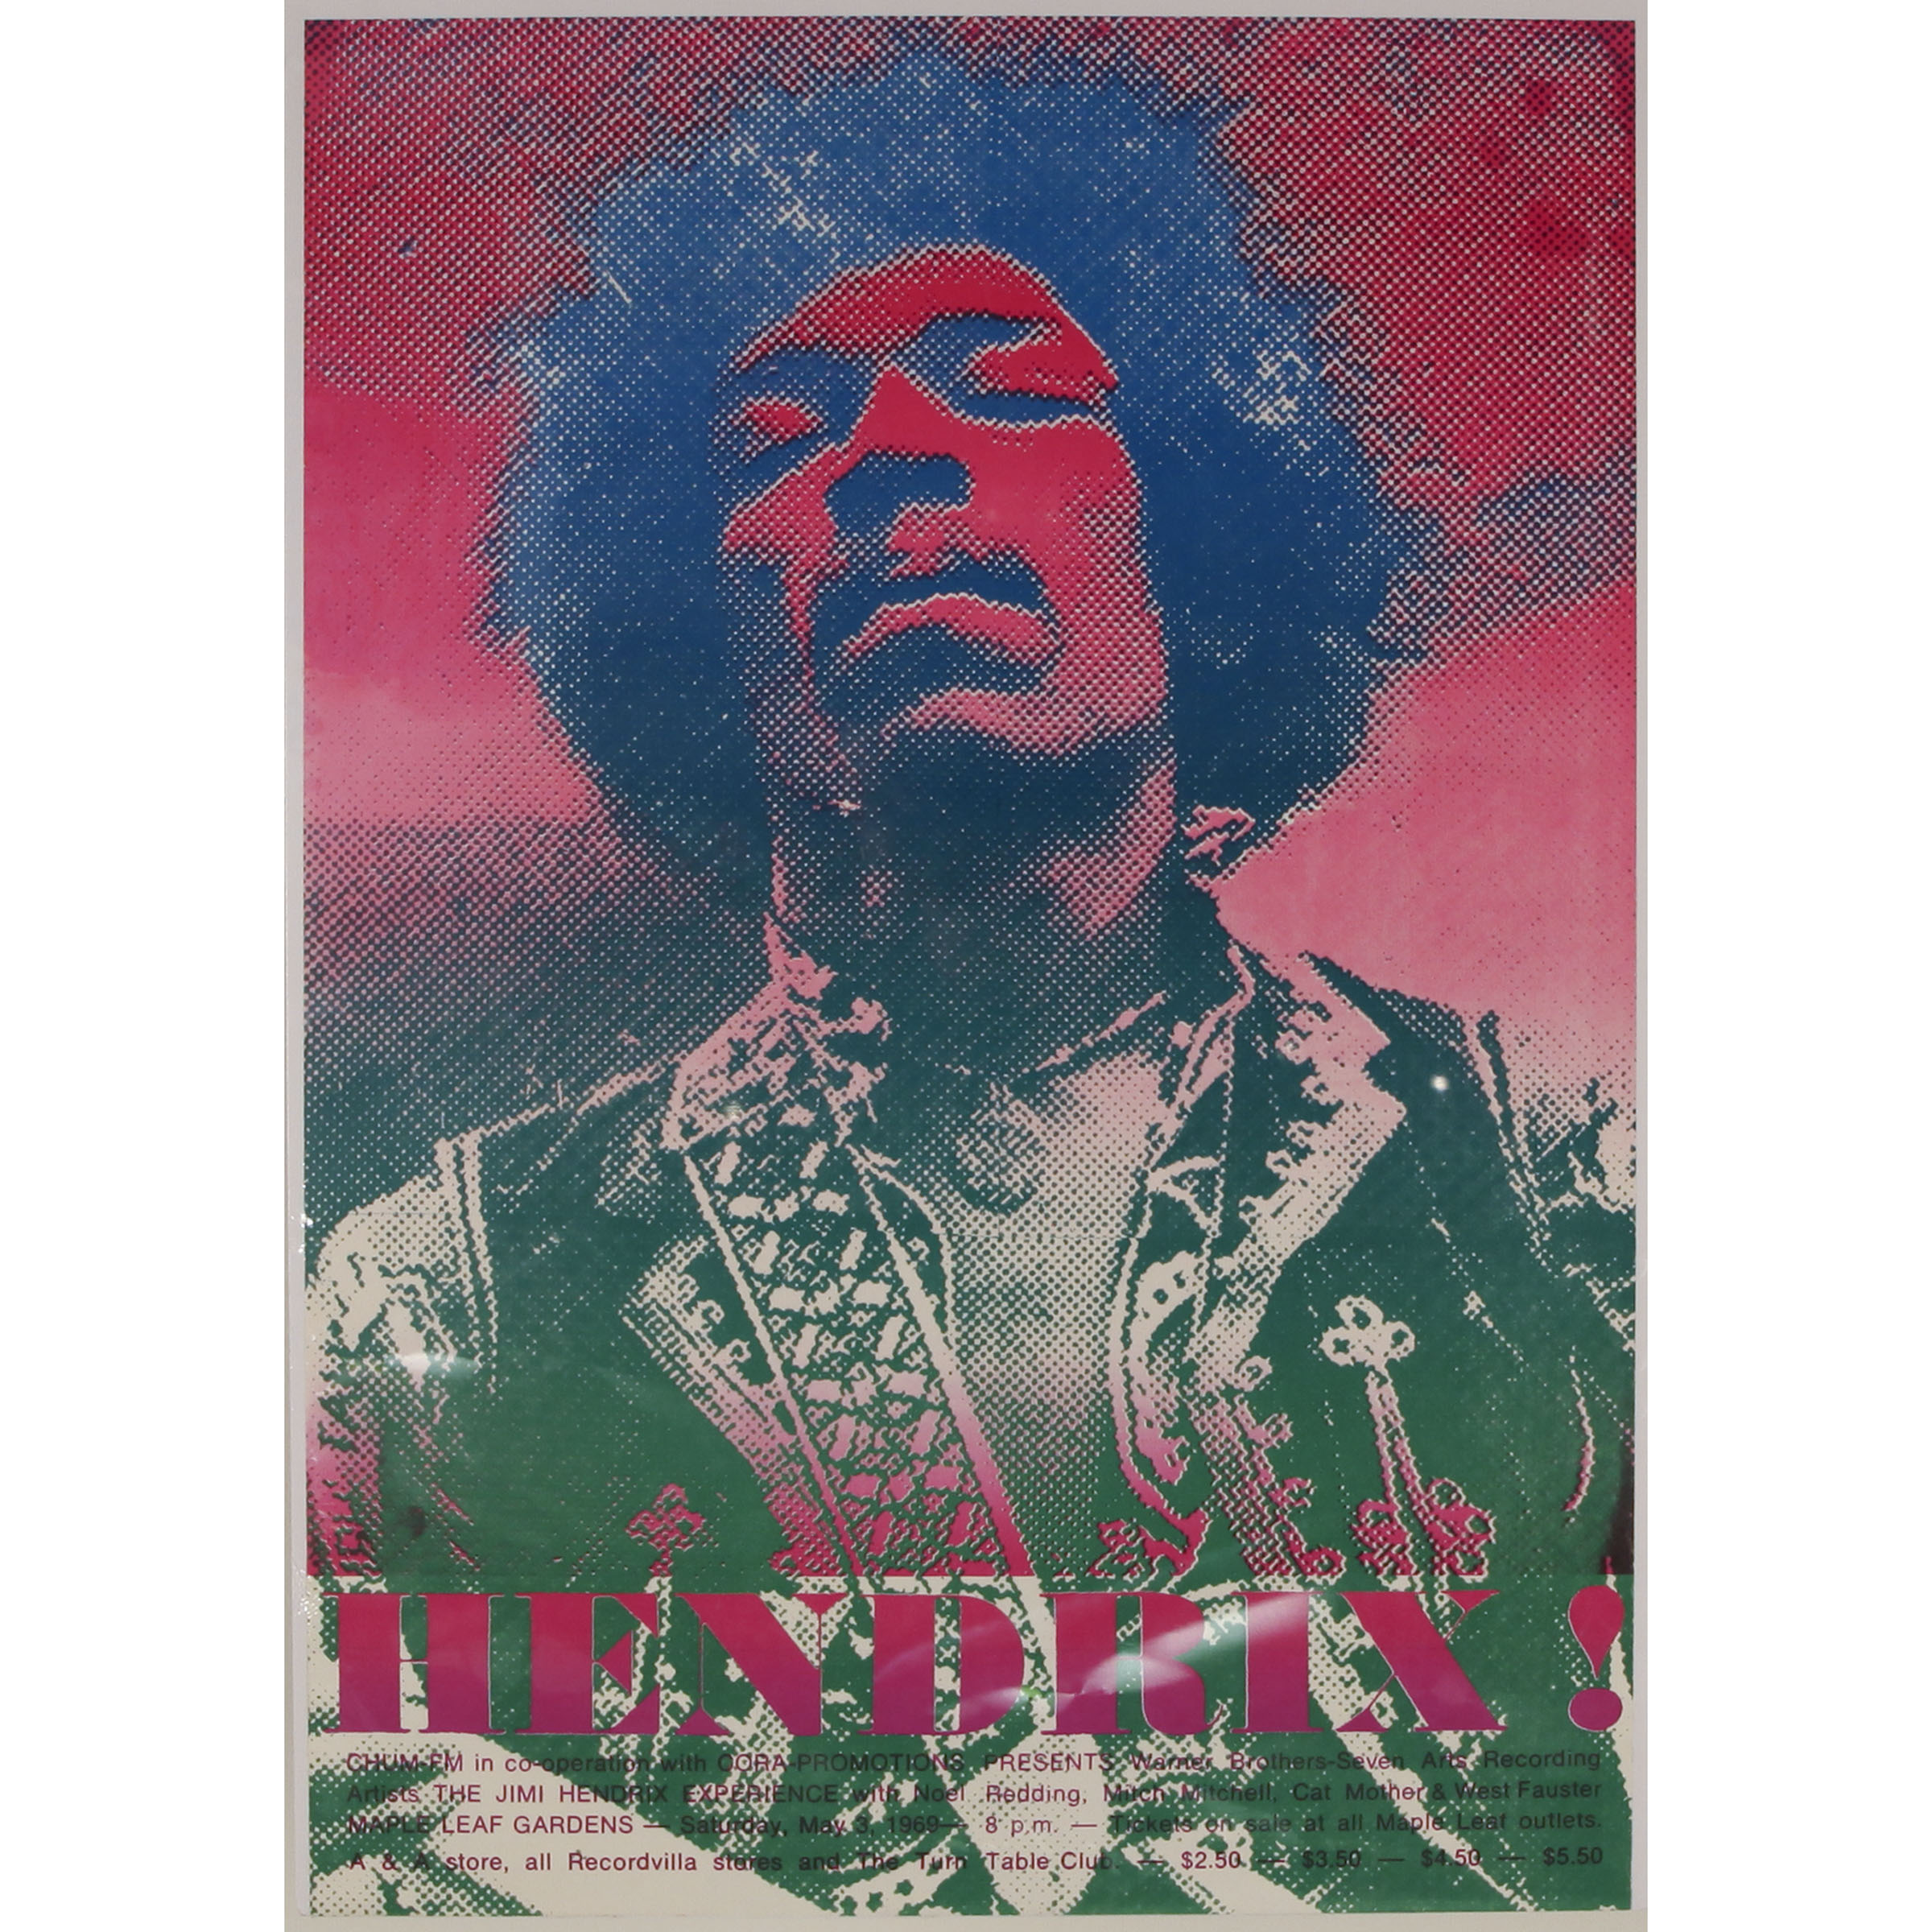 Hendrix! Concert Poster, May 3, 1969